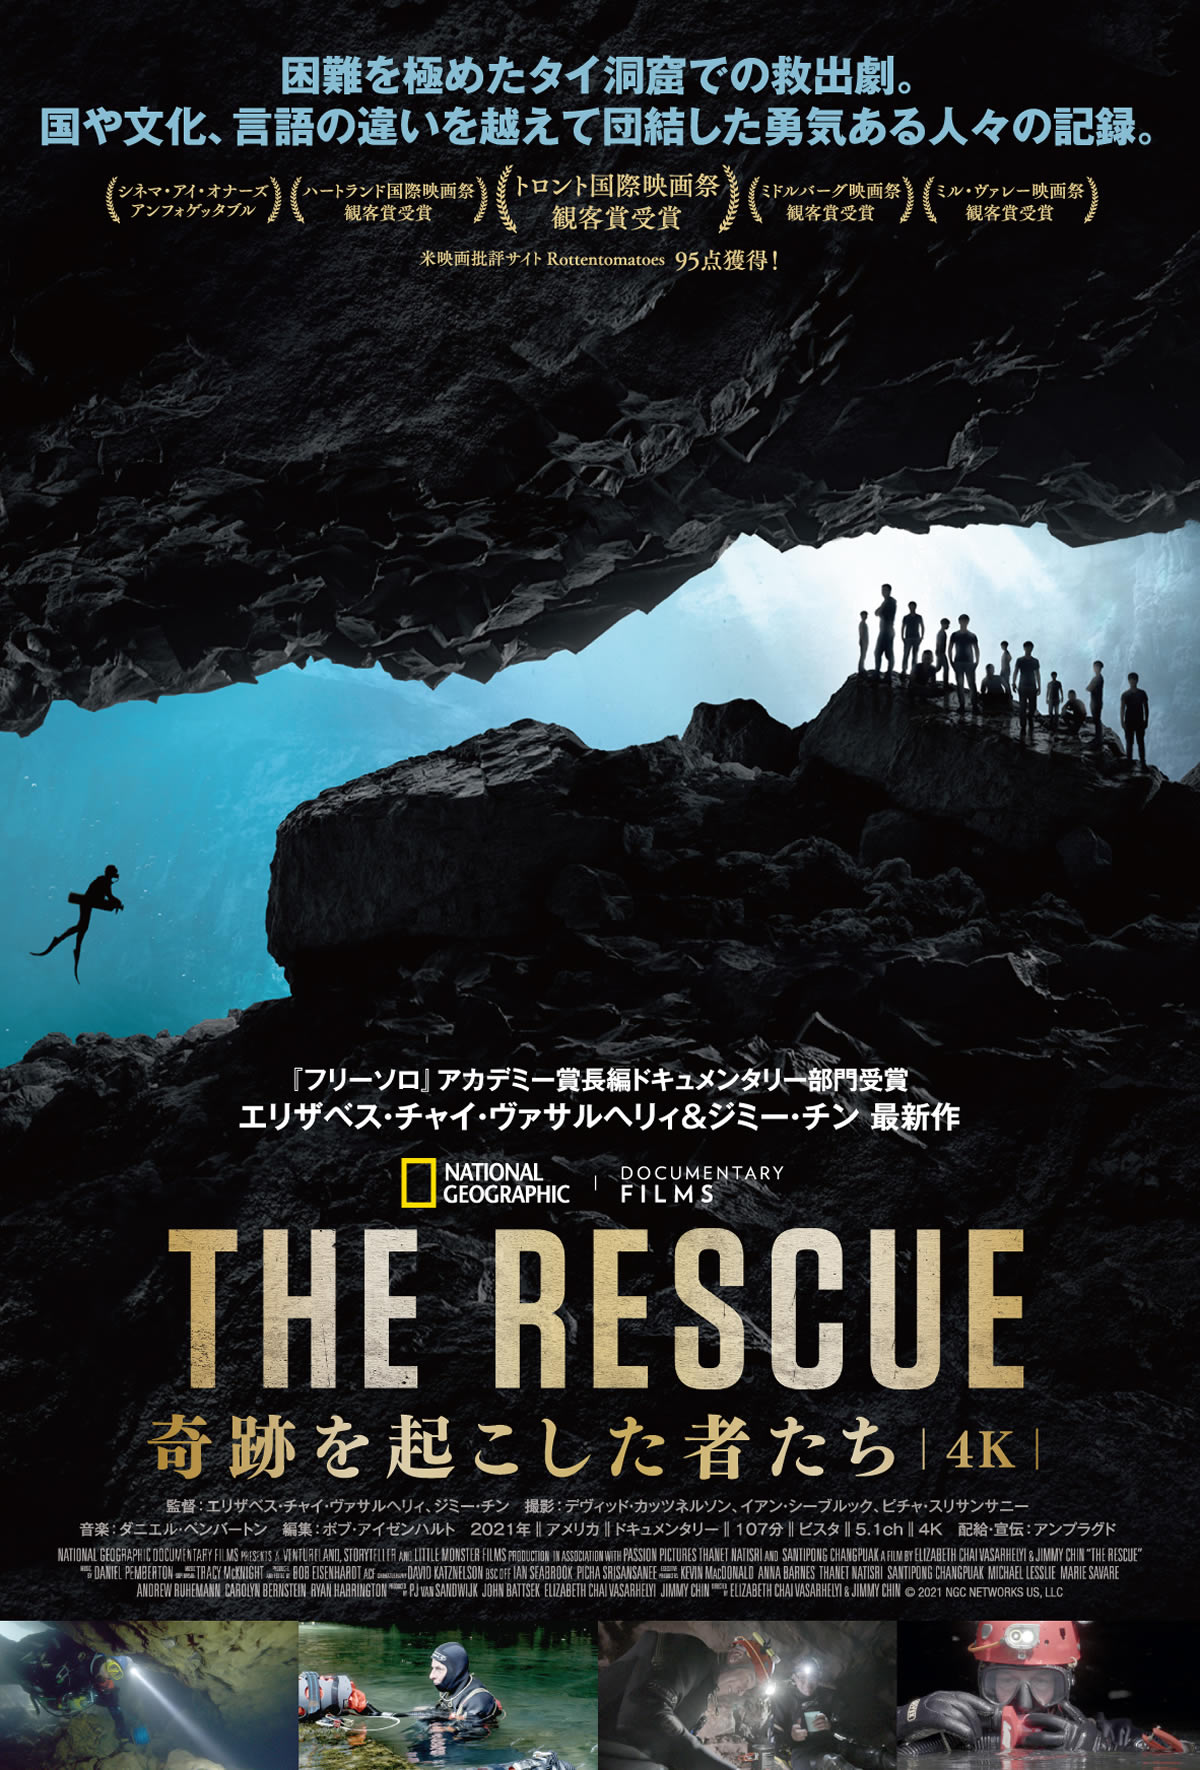 『THE RESCUE 奇跡を起こした者たち』タイ洞窟事故の舞台裏を描いたドキュメンタリーが日本公開決定 